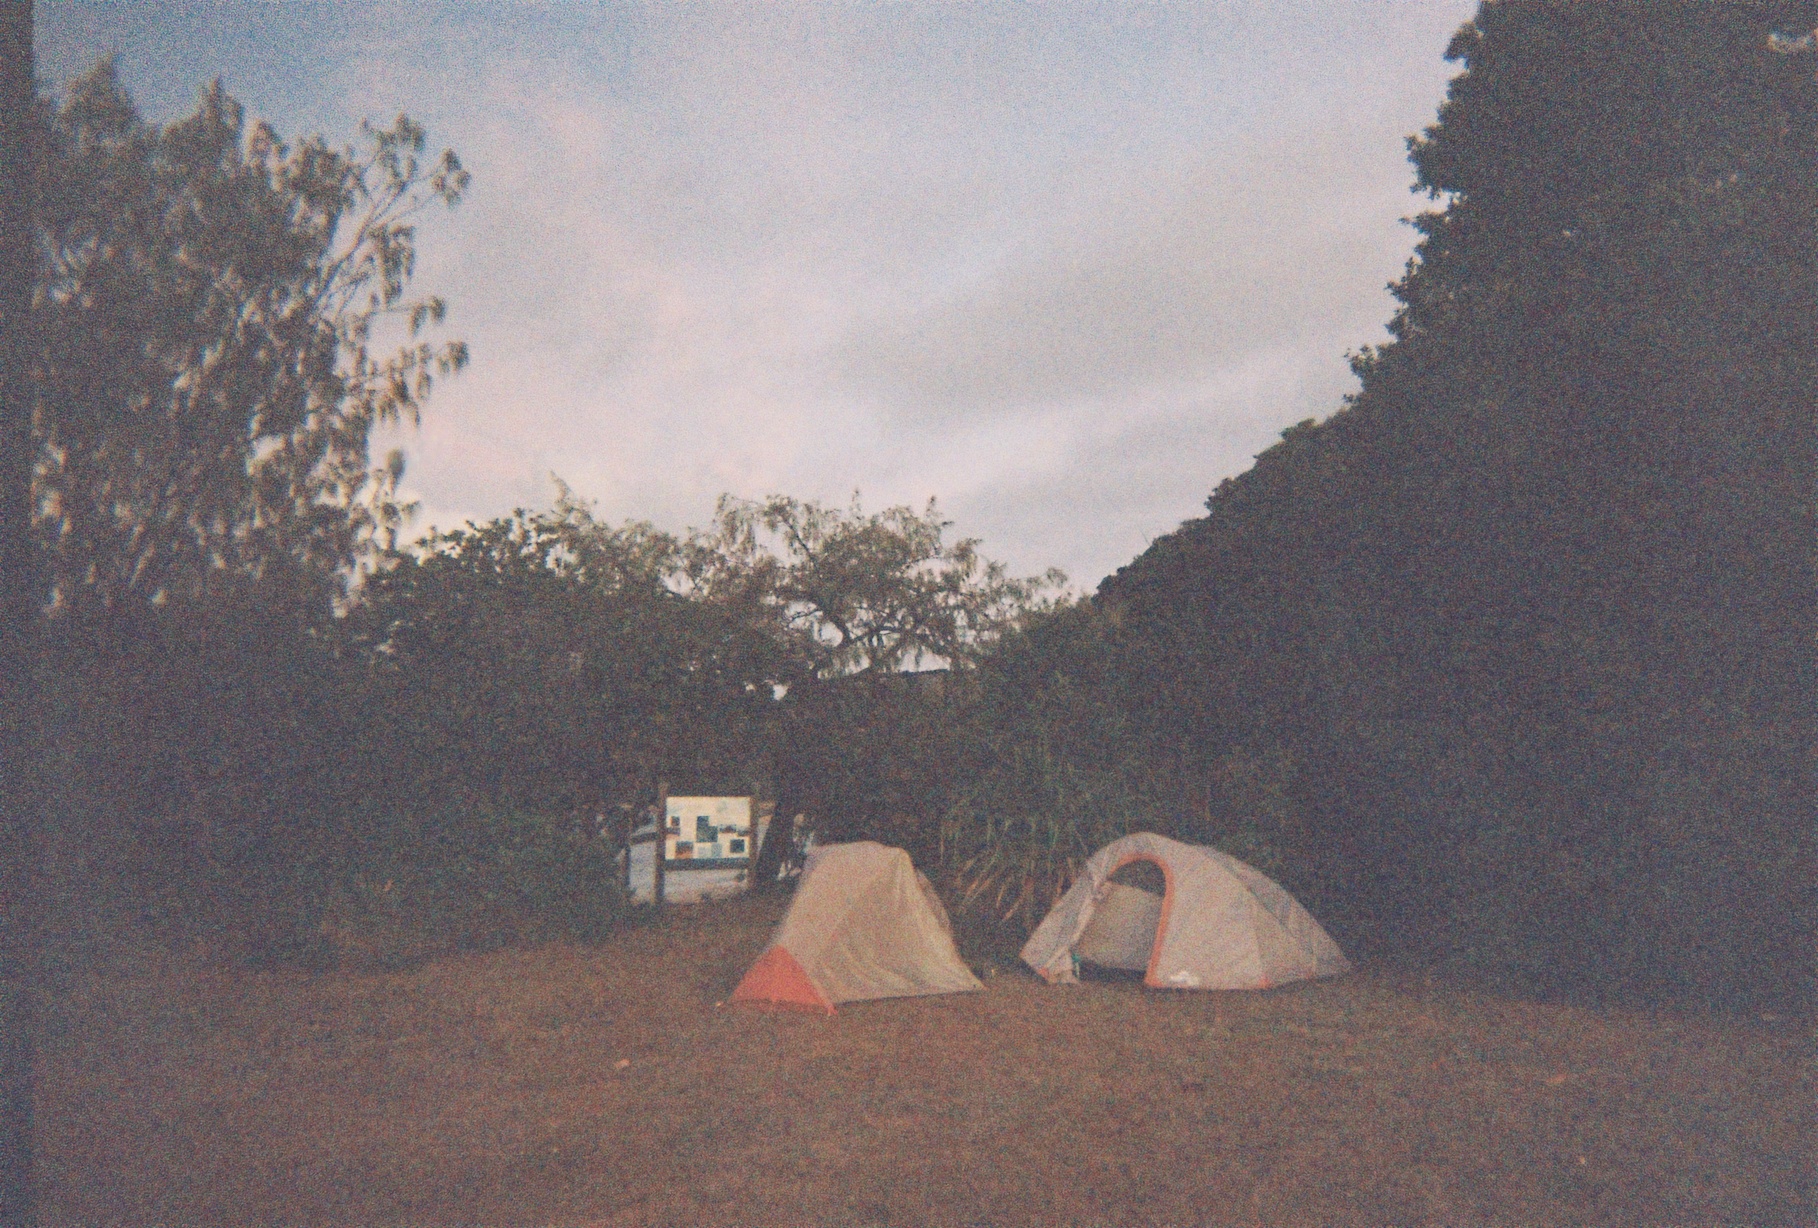 Both tents